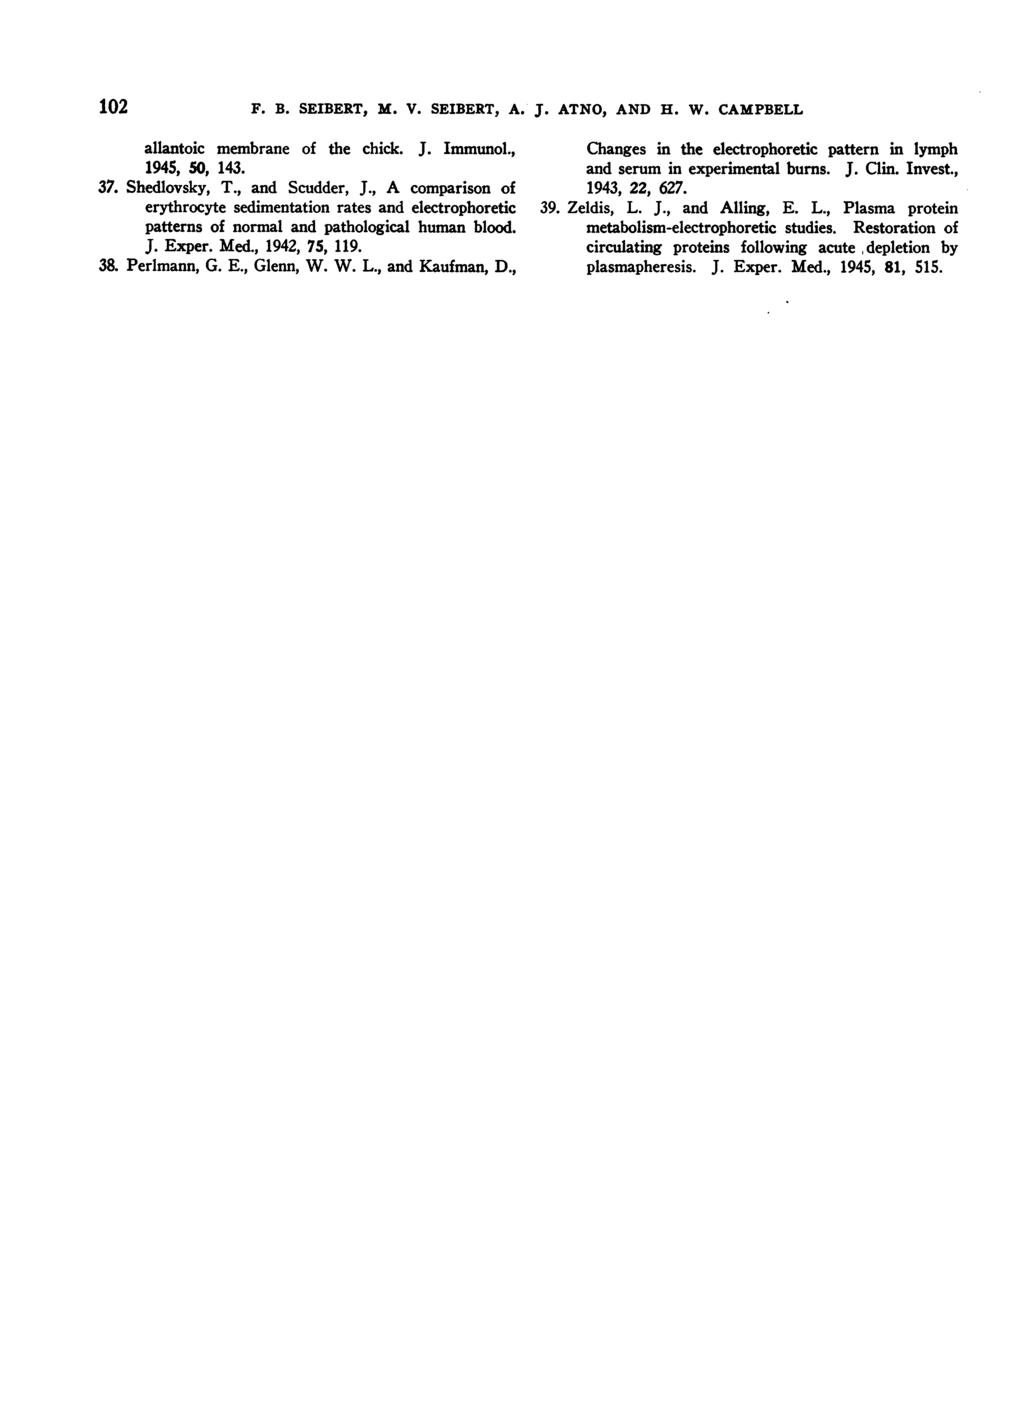 12 F B SEIBERT, M V SEIBERT, A J ATNO, AND H W CAMPBELL llntoic membrne of the chick J Immunol, 1945, 5, 143 37 Shedlovsky, T, nd Scudder, J, A comprison of erythrocyte sedimenttion rtes nd